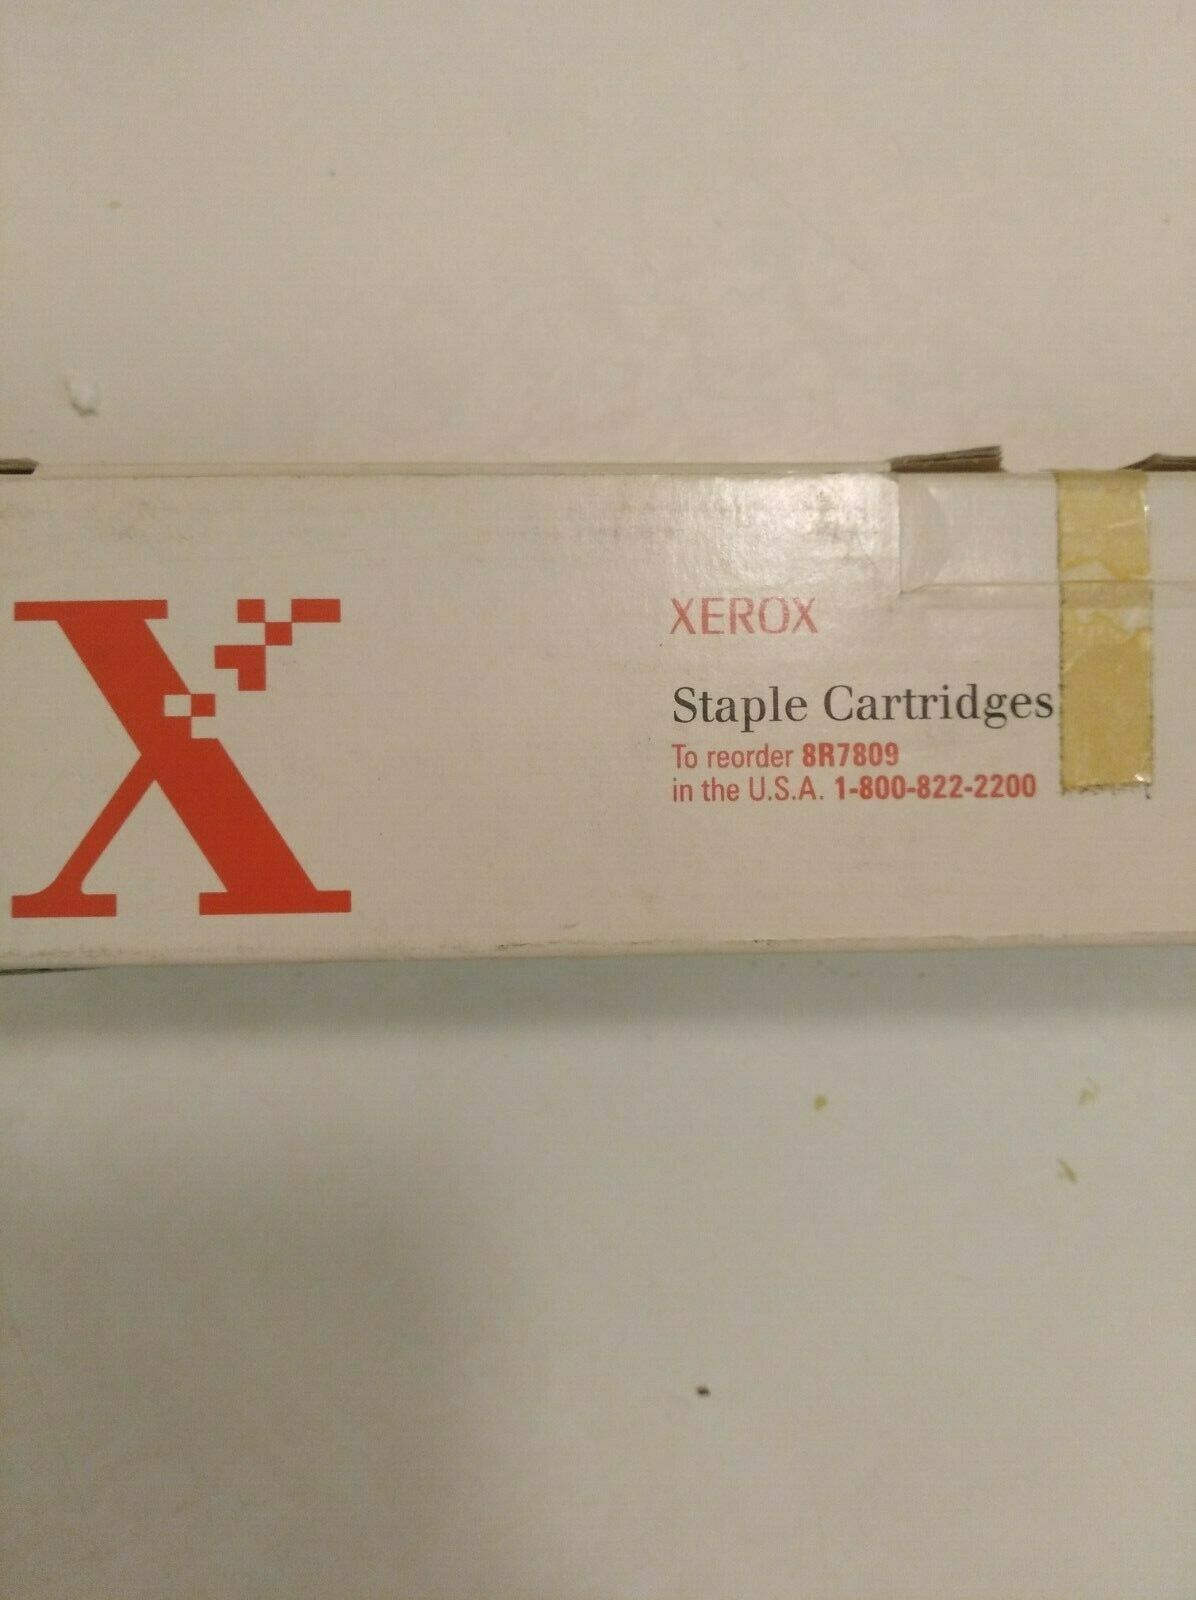 Genuine OEM Xerox Staple Cartridges 8R7809 - 3 Cartridges, 1500 Staples - NEW - $9.59